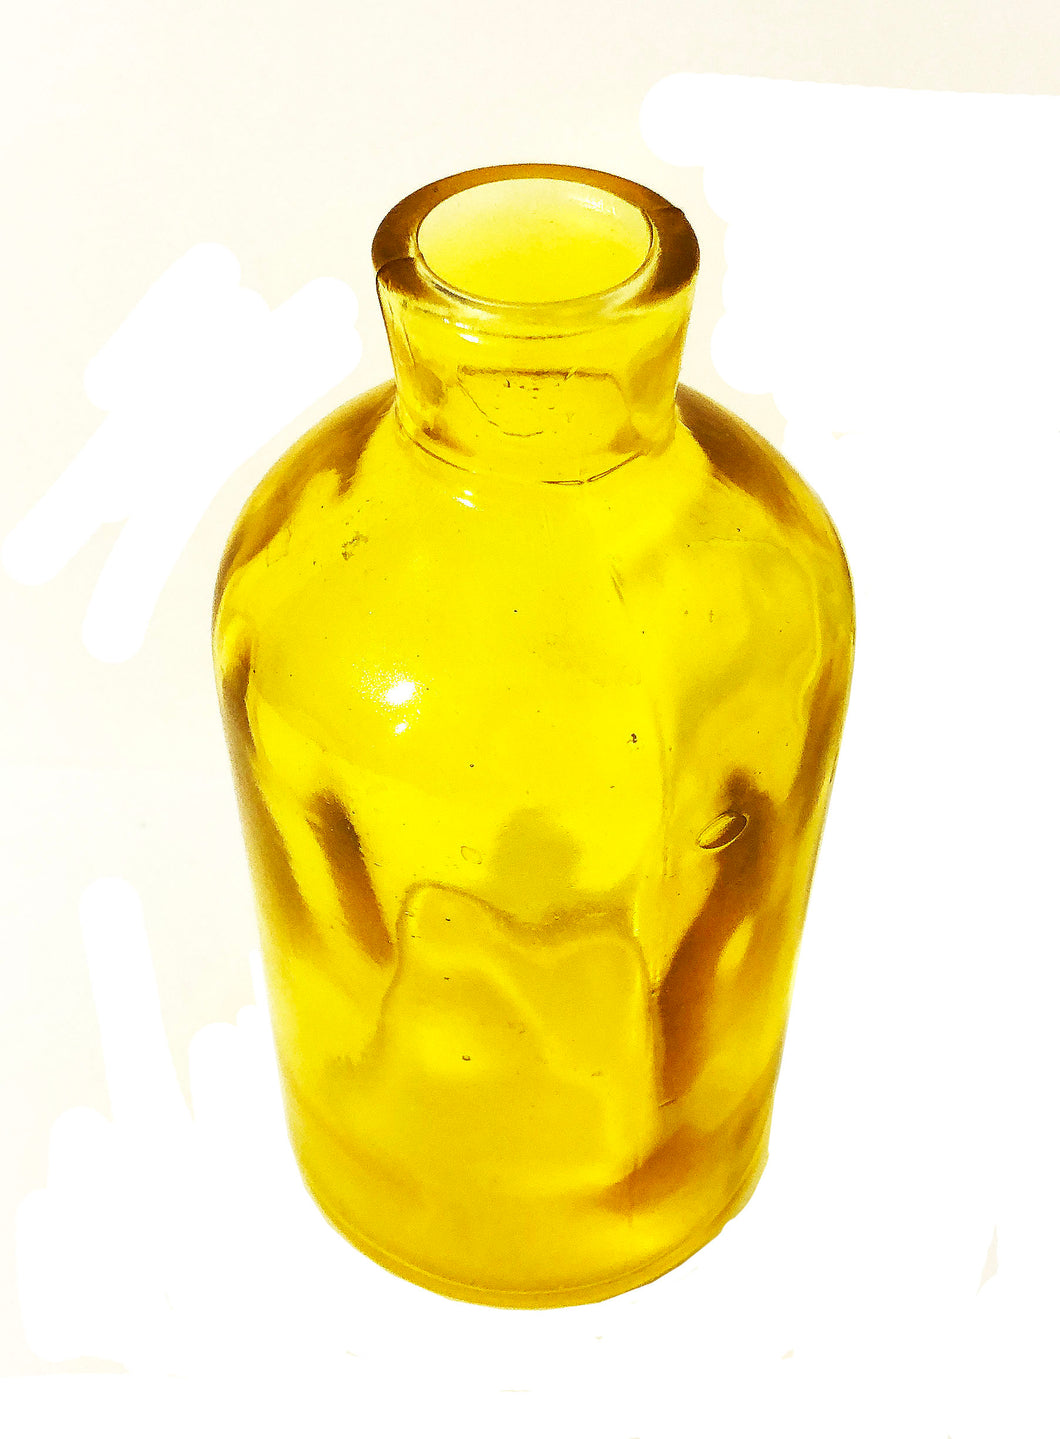 Ink Bottle, yellow